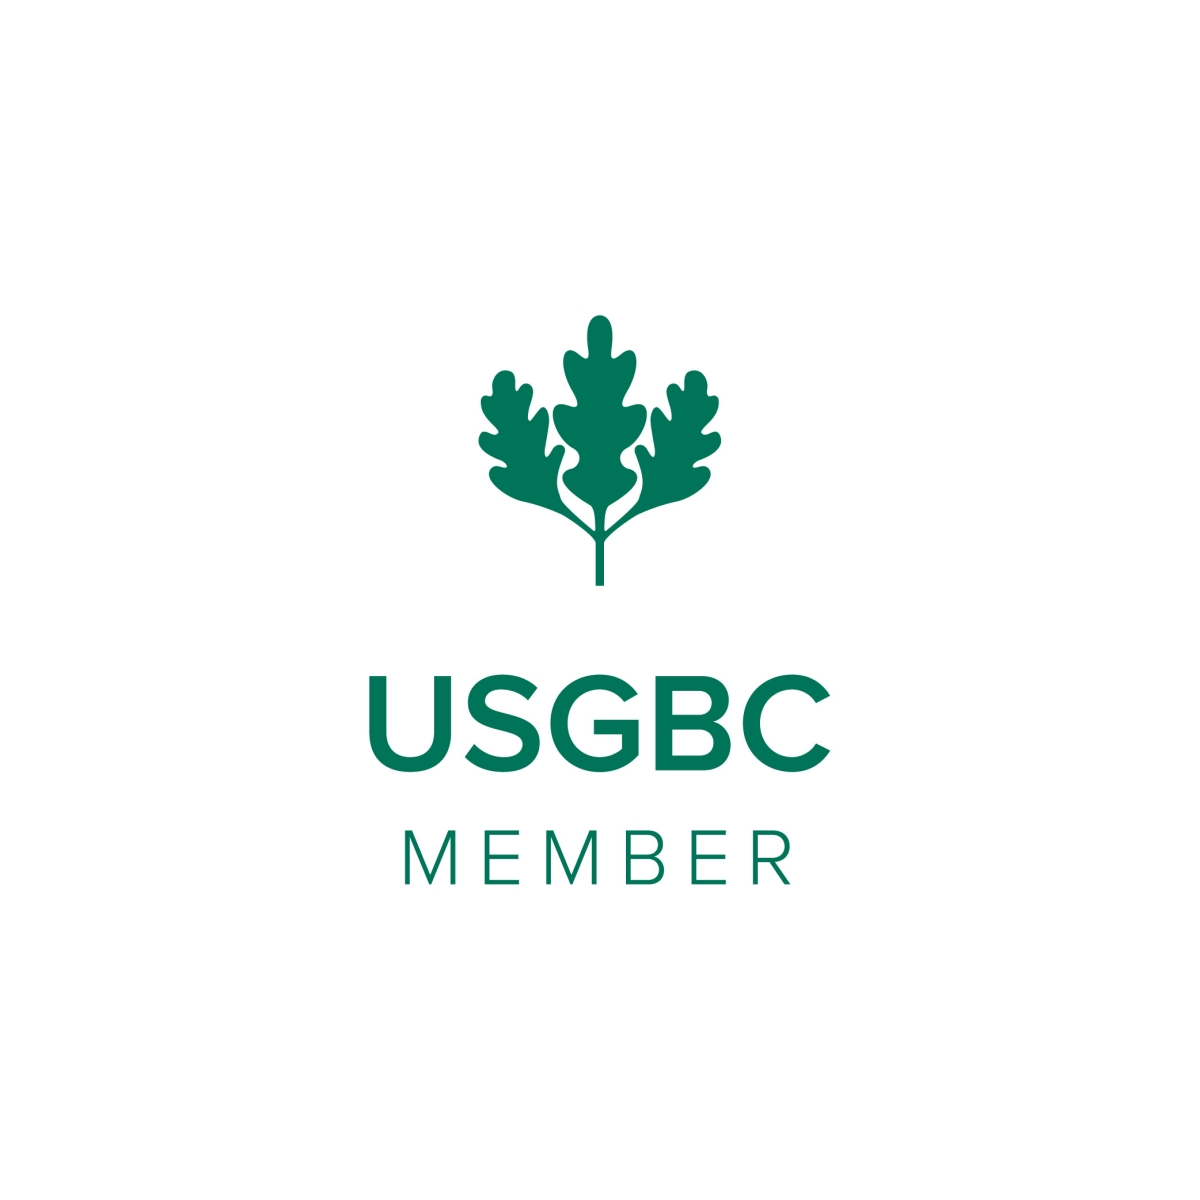 USGBC logo 